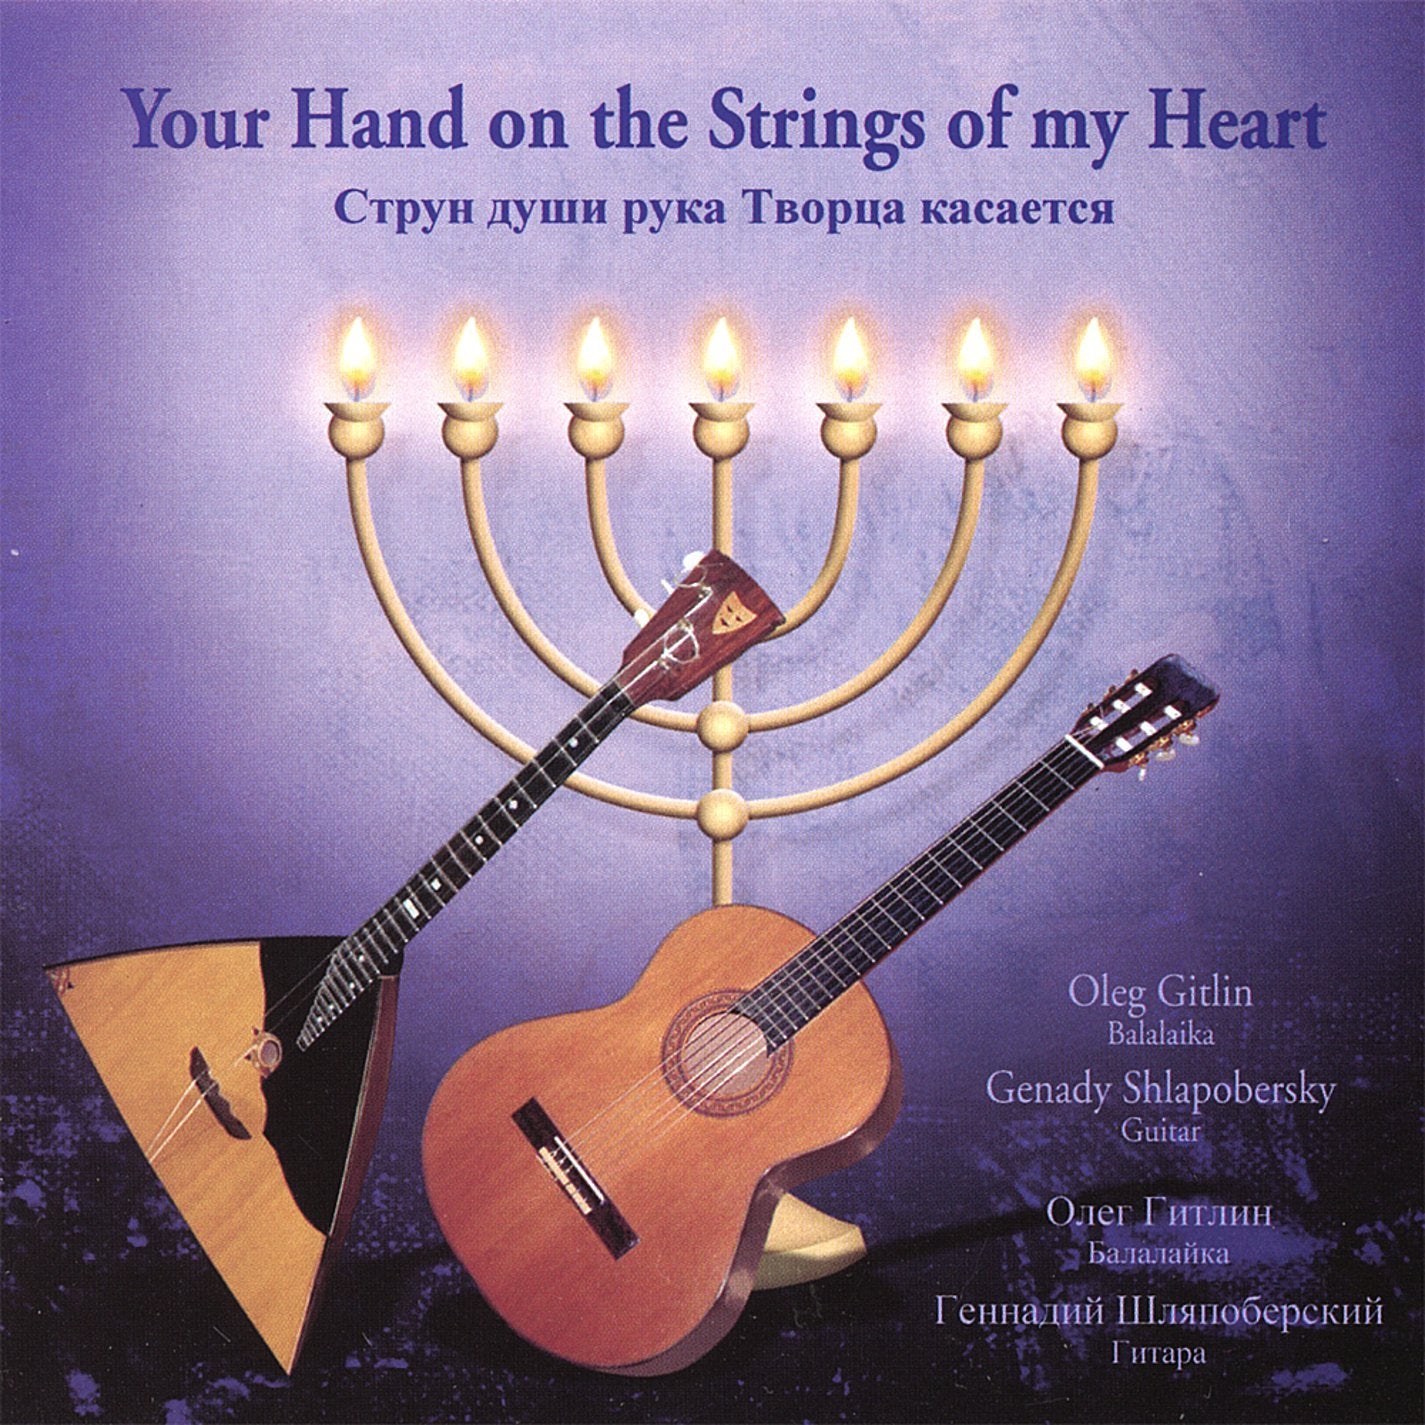 Oleg Gitlin & Genady Shlapobersky:  Your Hand on the Strings of my Heart